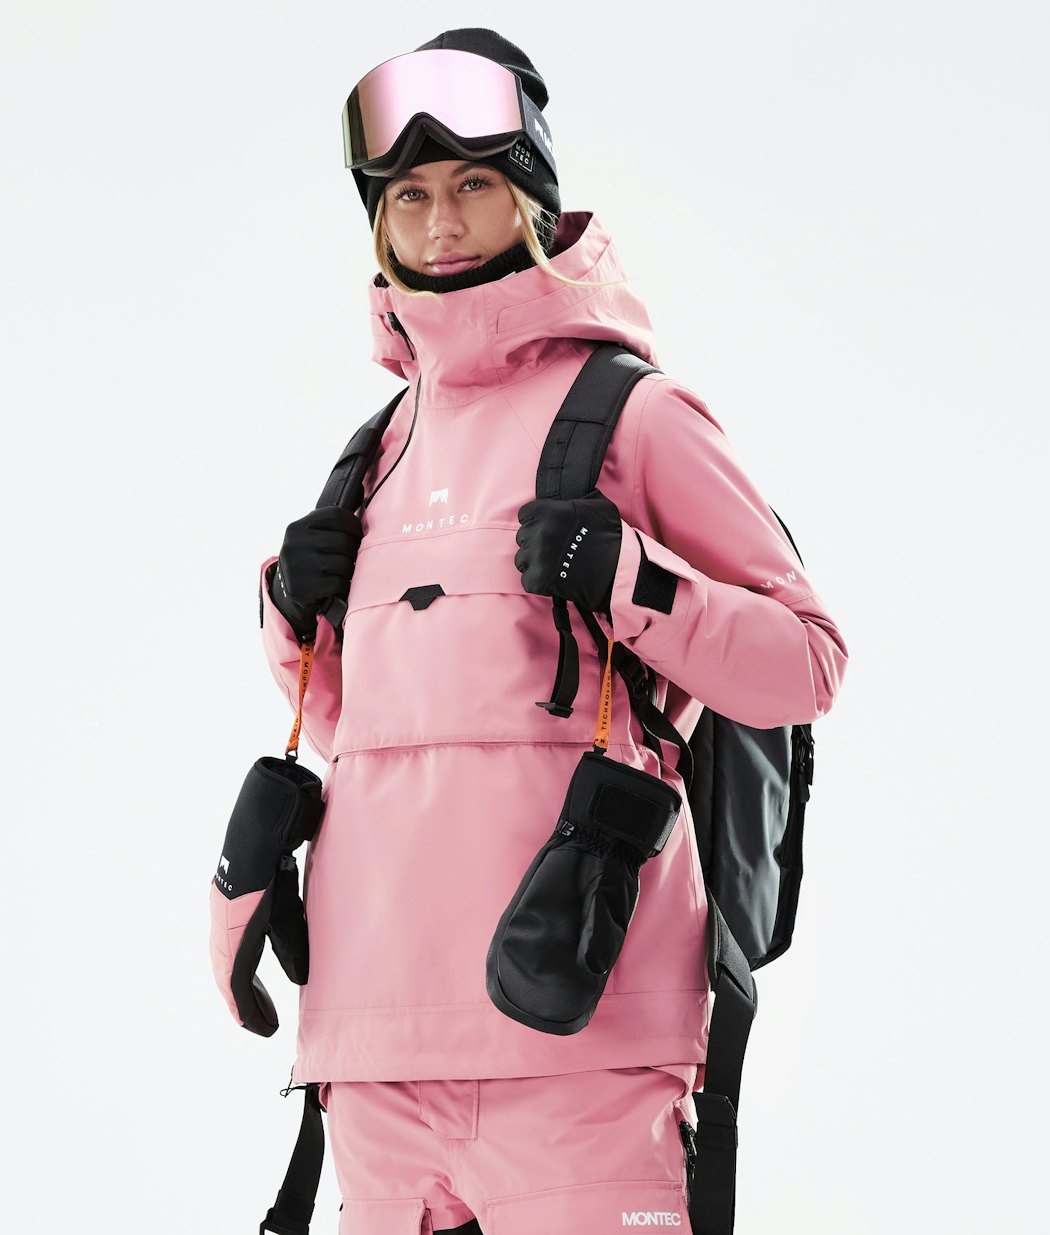 Dune W 2021 Snowboard Jacket Women Pink Renewed